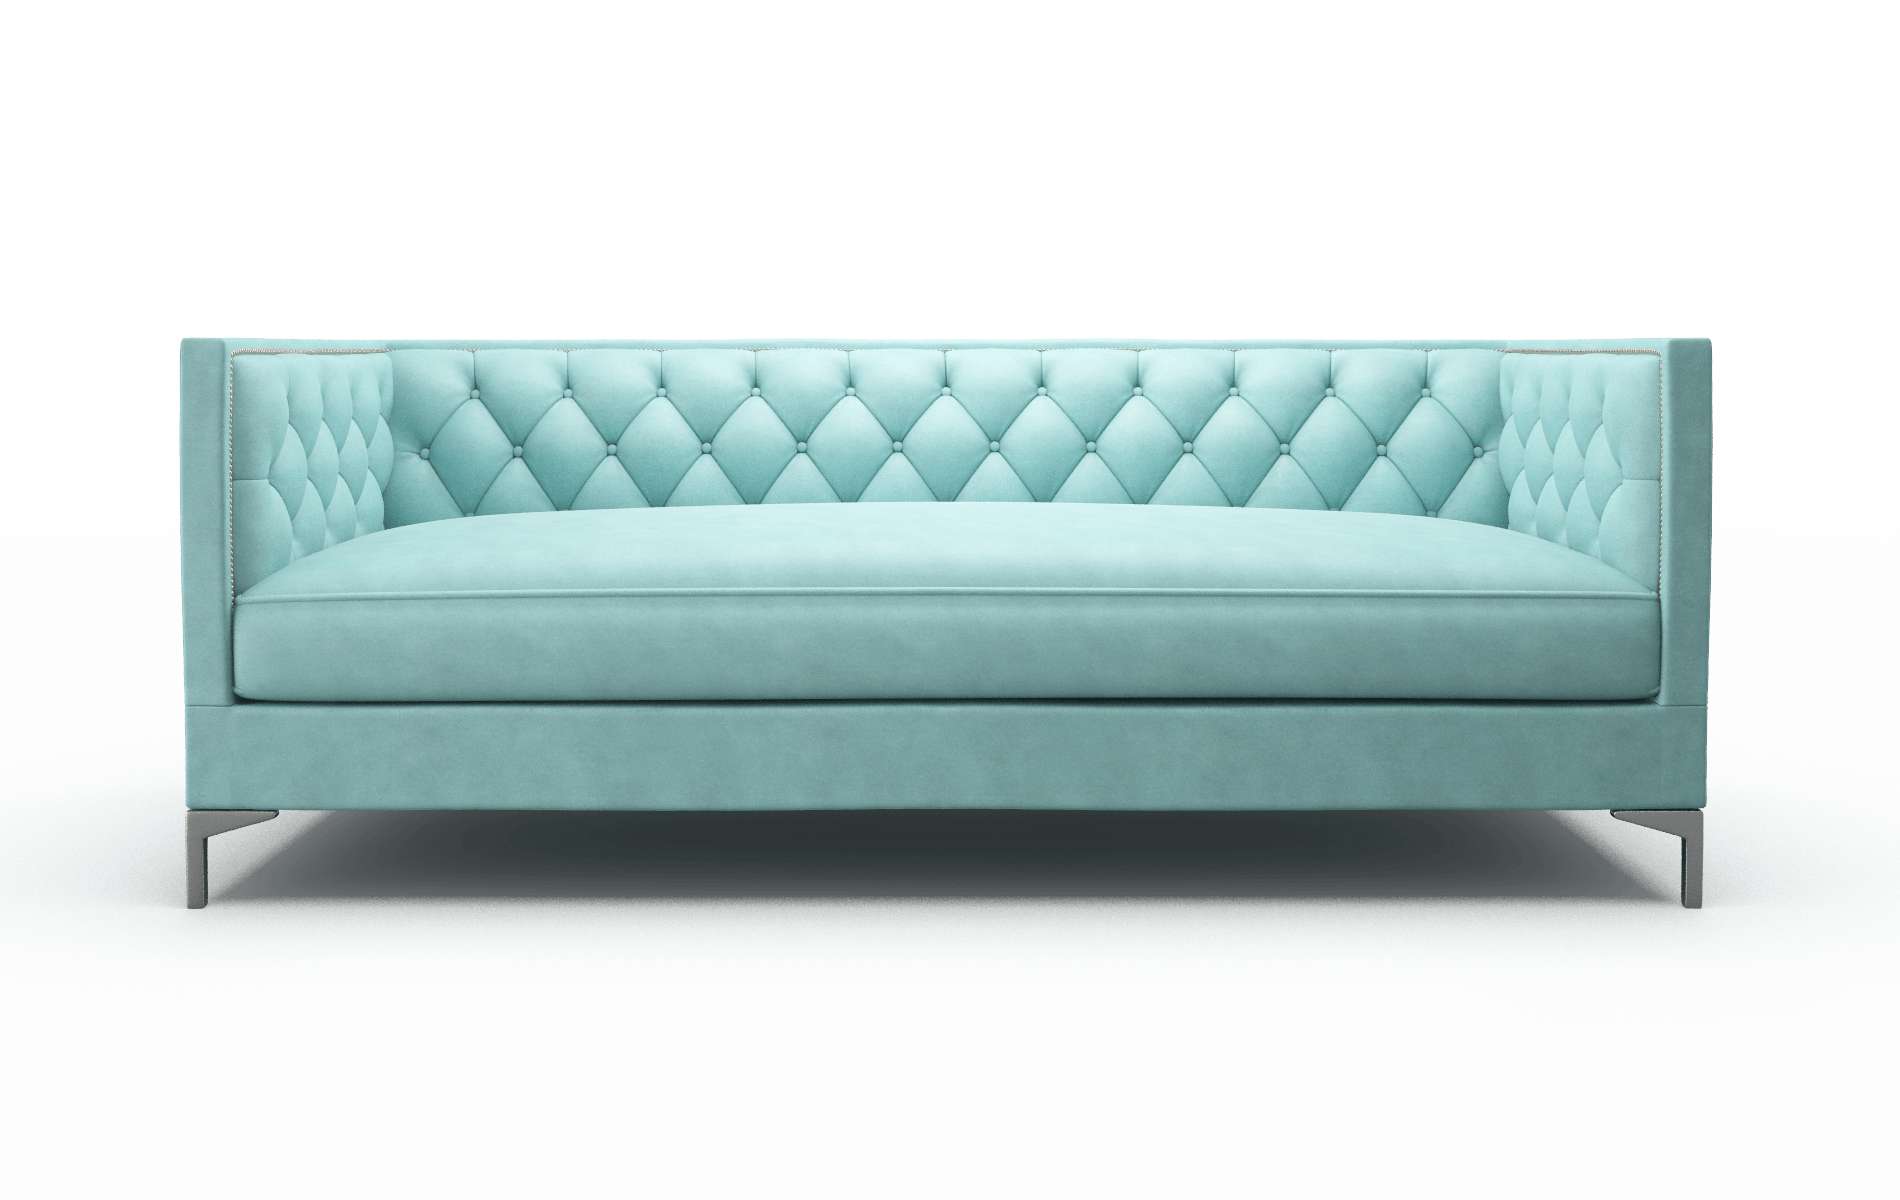 Gosford Curious Turquoise Sofa metal legs